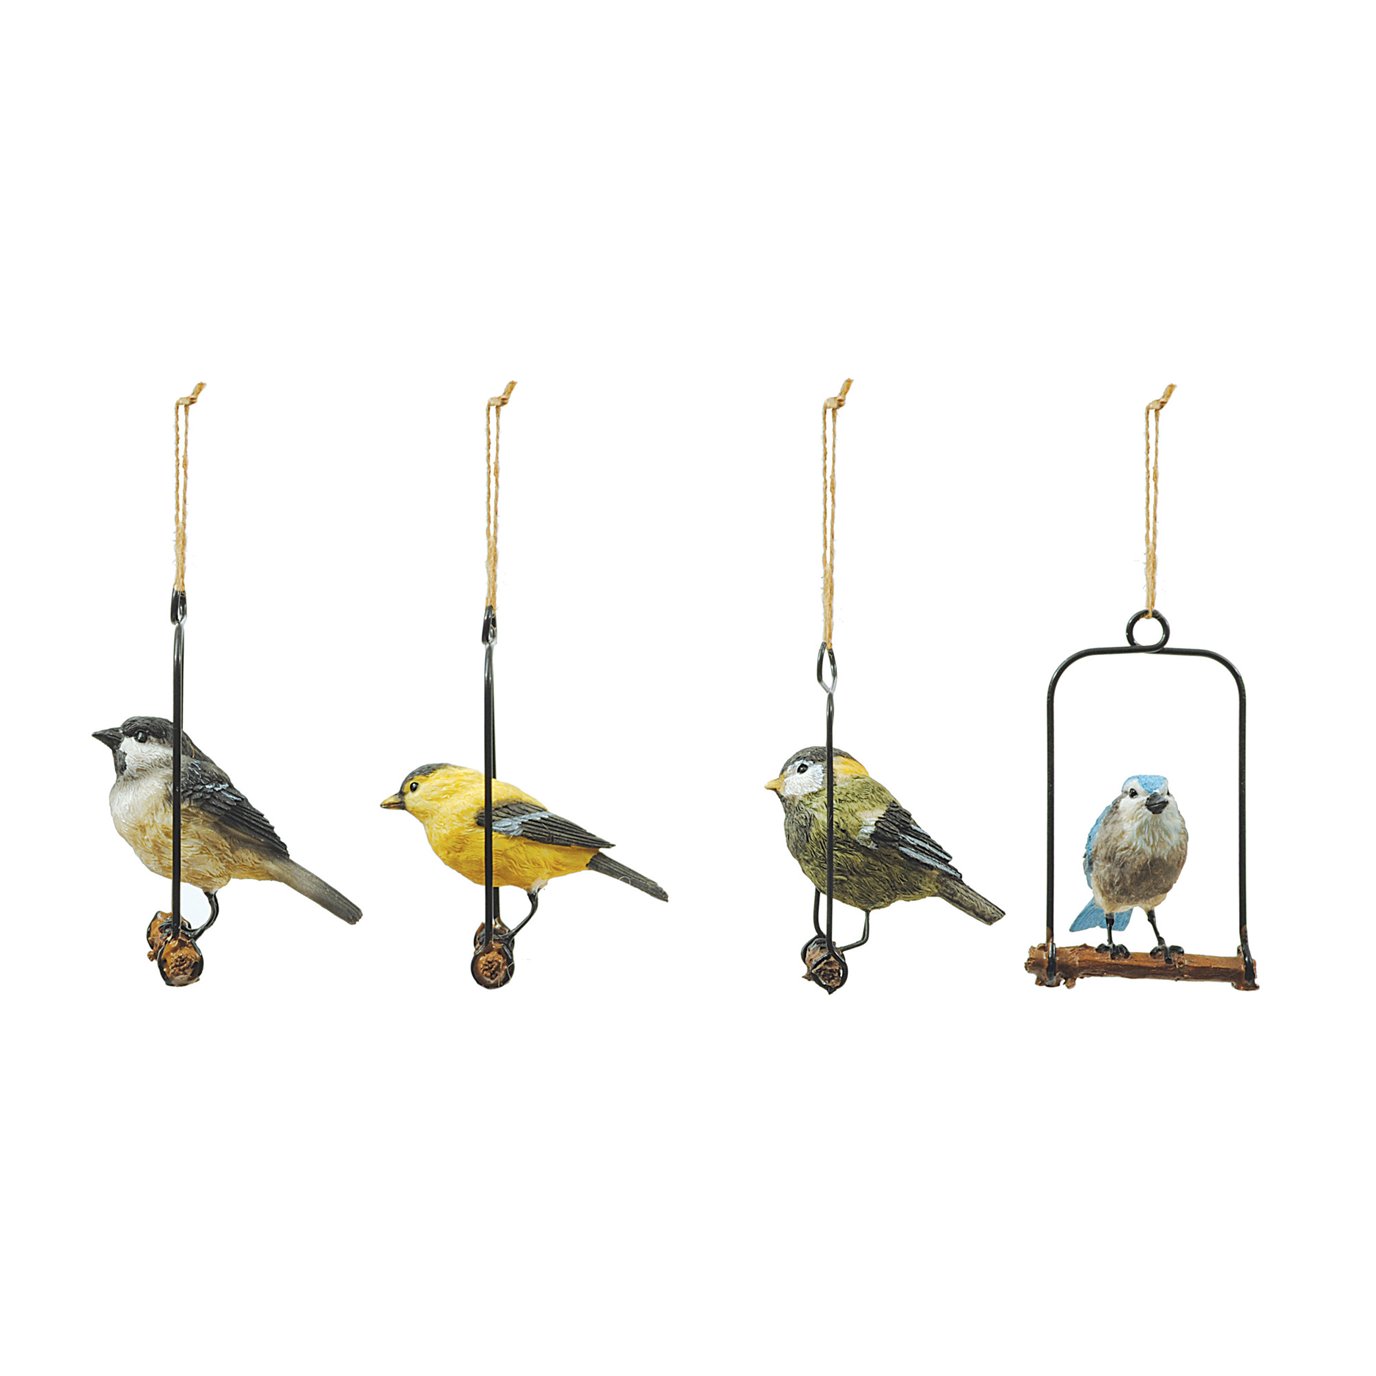 Resin Bird on Metal Perch Ornaments (Set of 4 Styles)